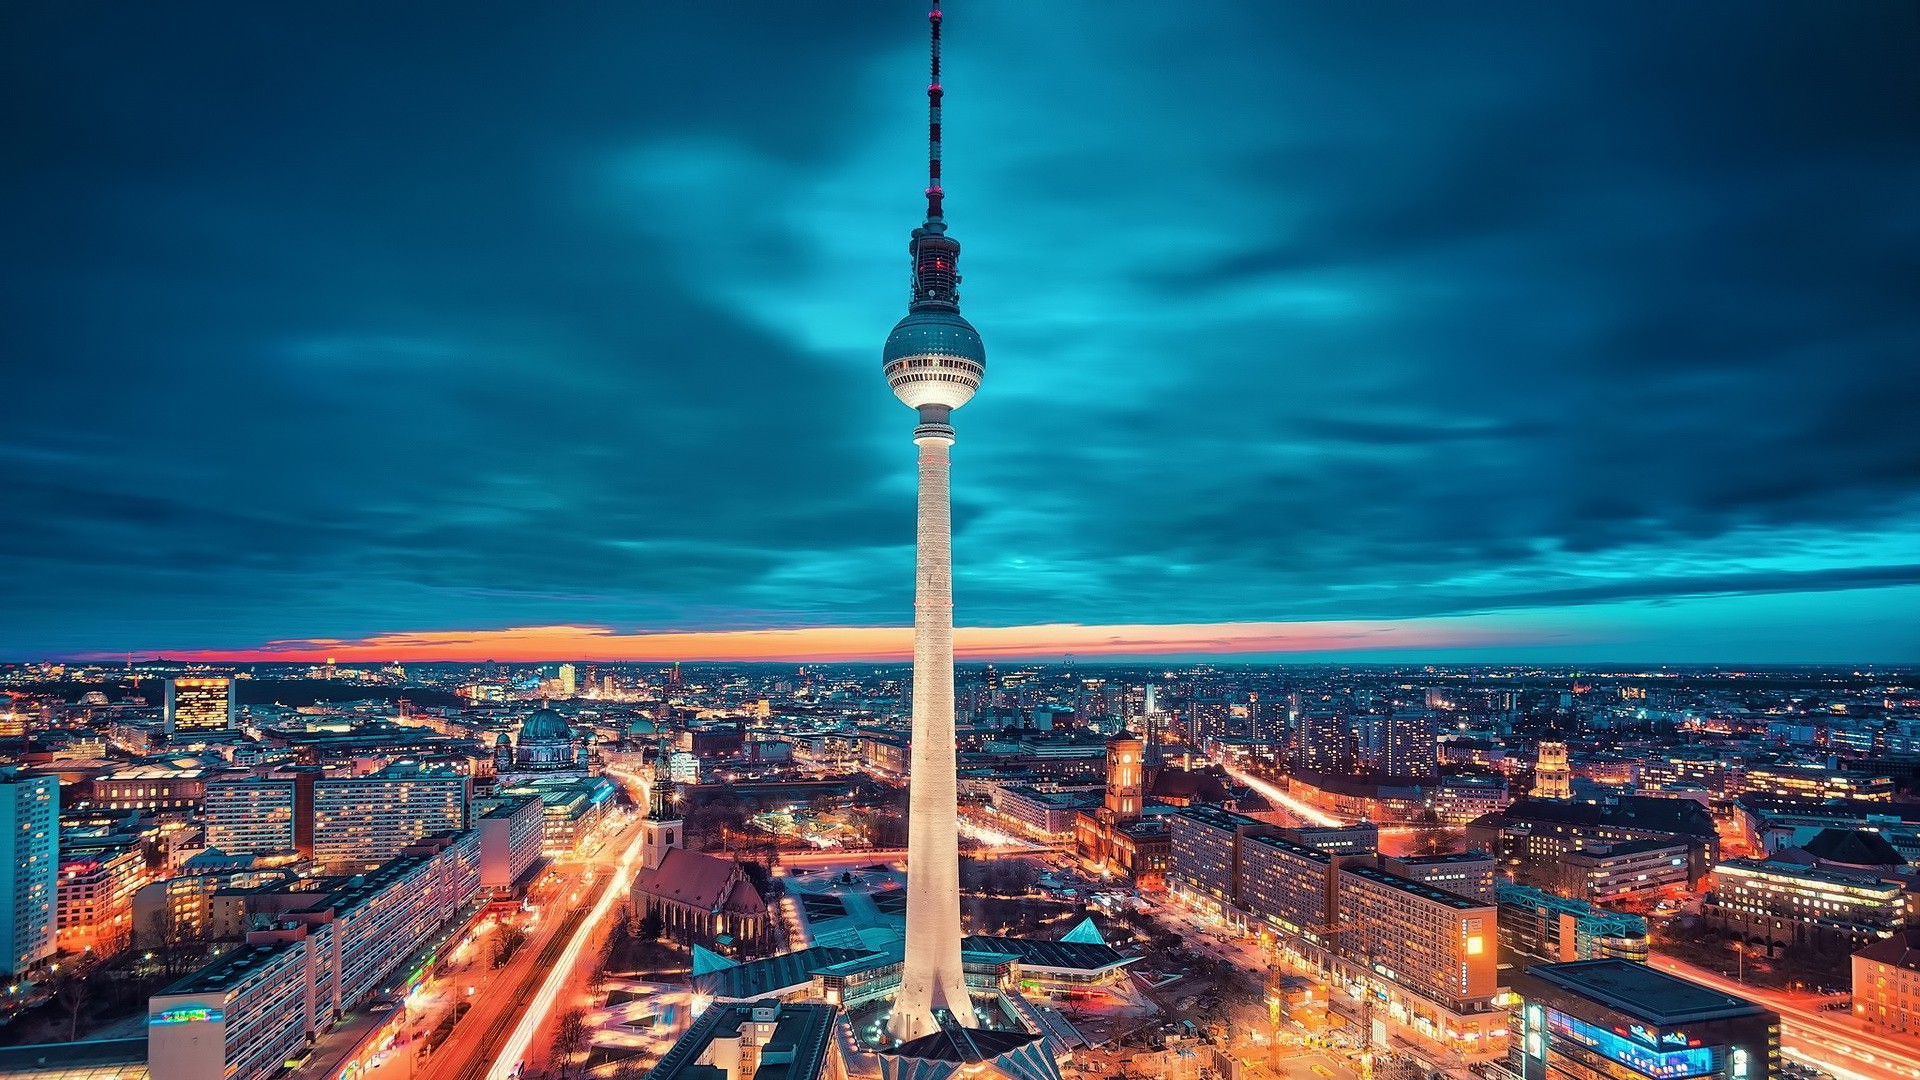 General 1920x1080 Berlin cityscape dusk city lights tower city Germany Berlin TV Tower landmark Europe